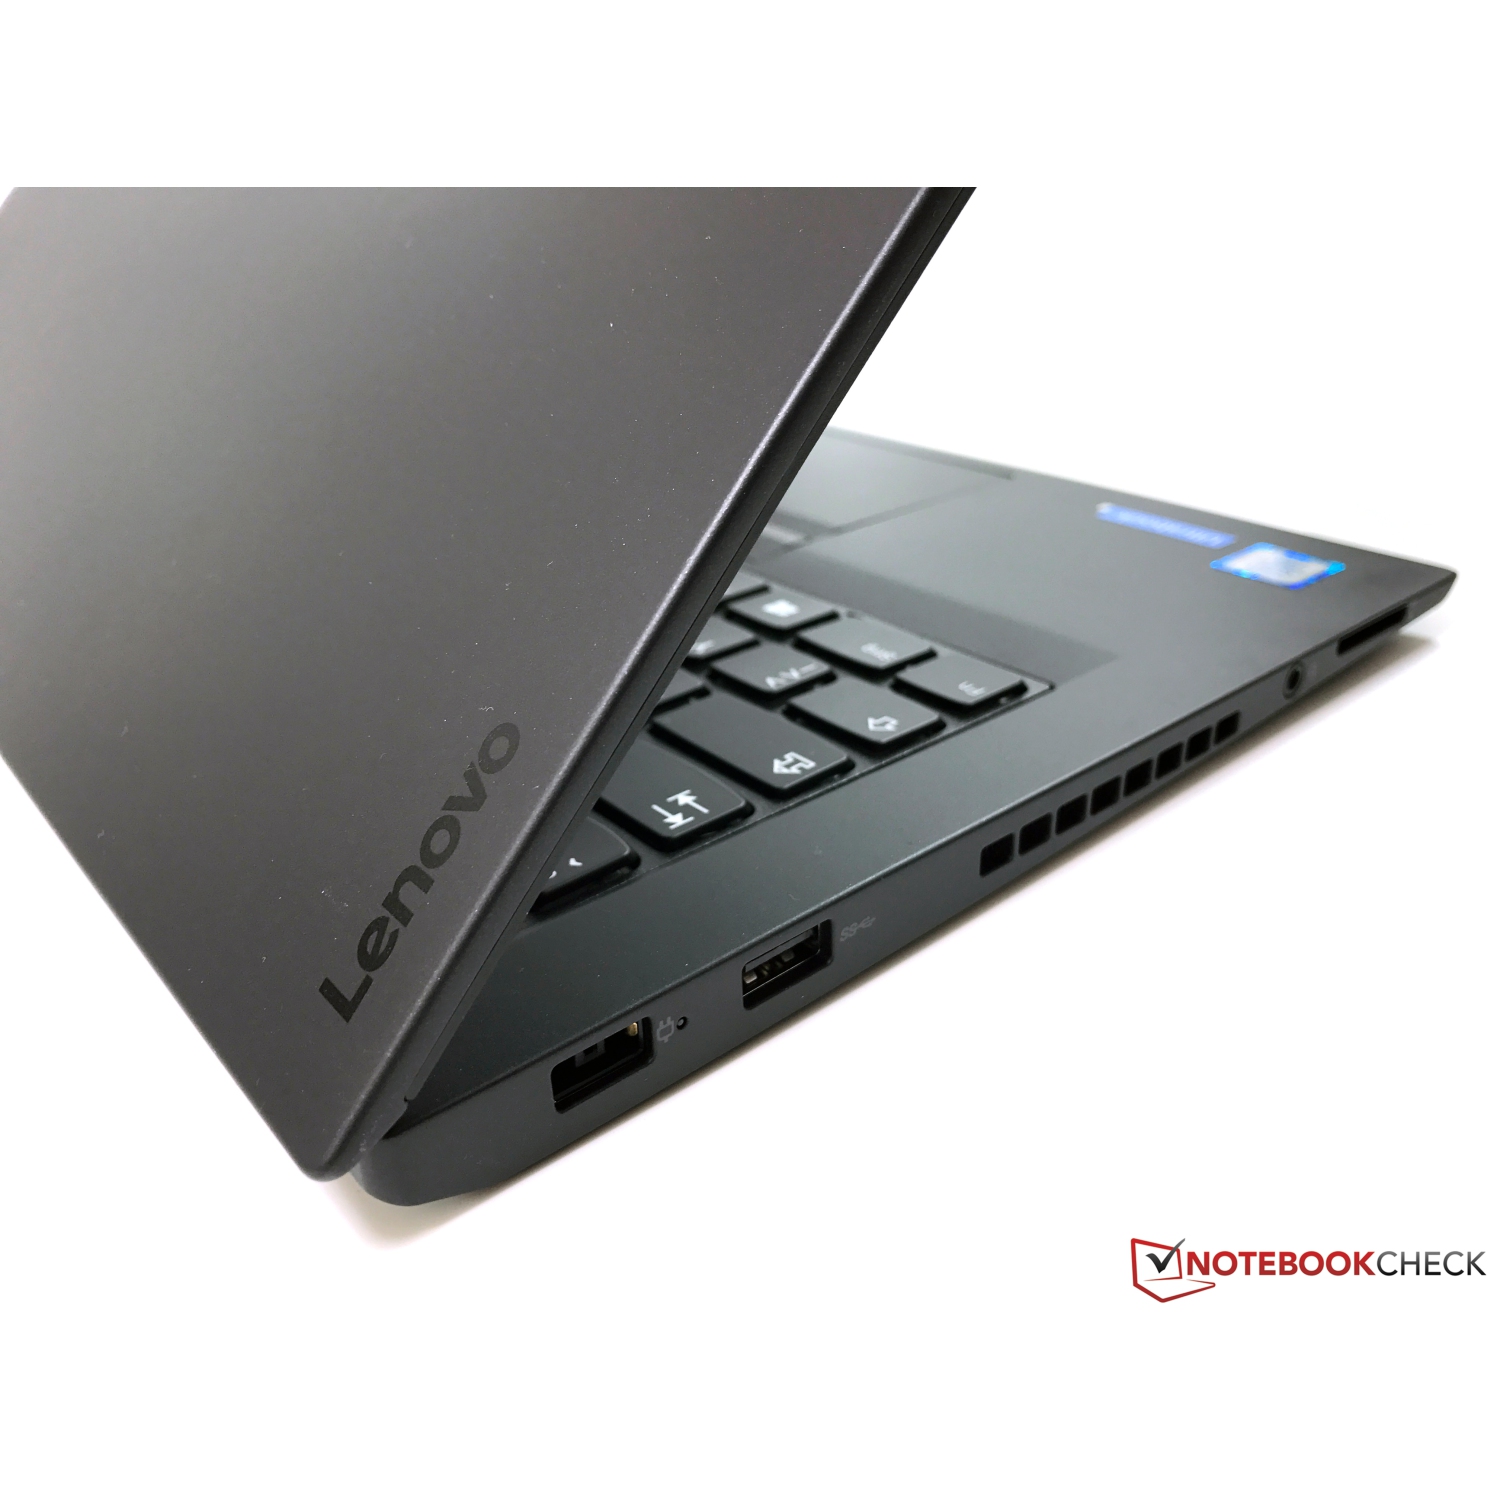 Refurbished (Good) - Lenovo ThinkPad T470s Intel Core i7-7600U 2.8